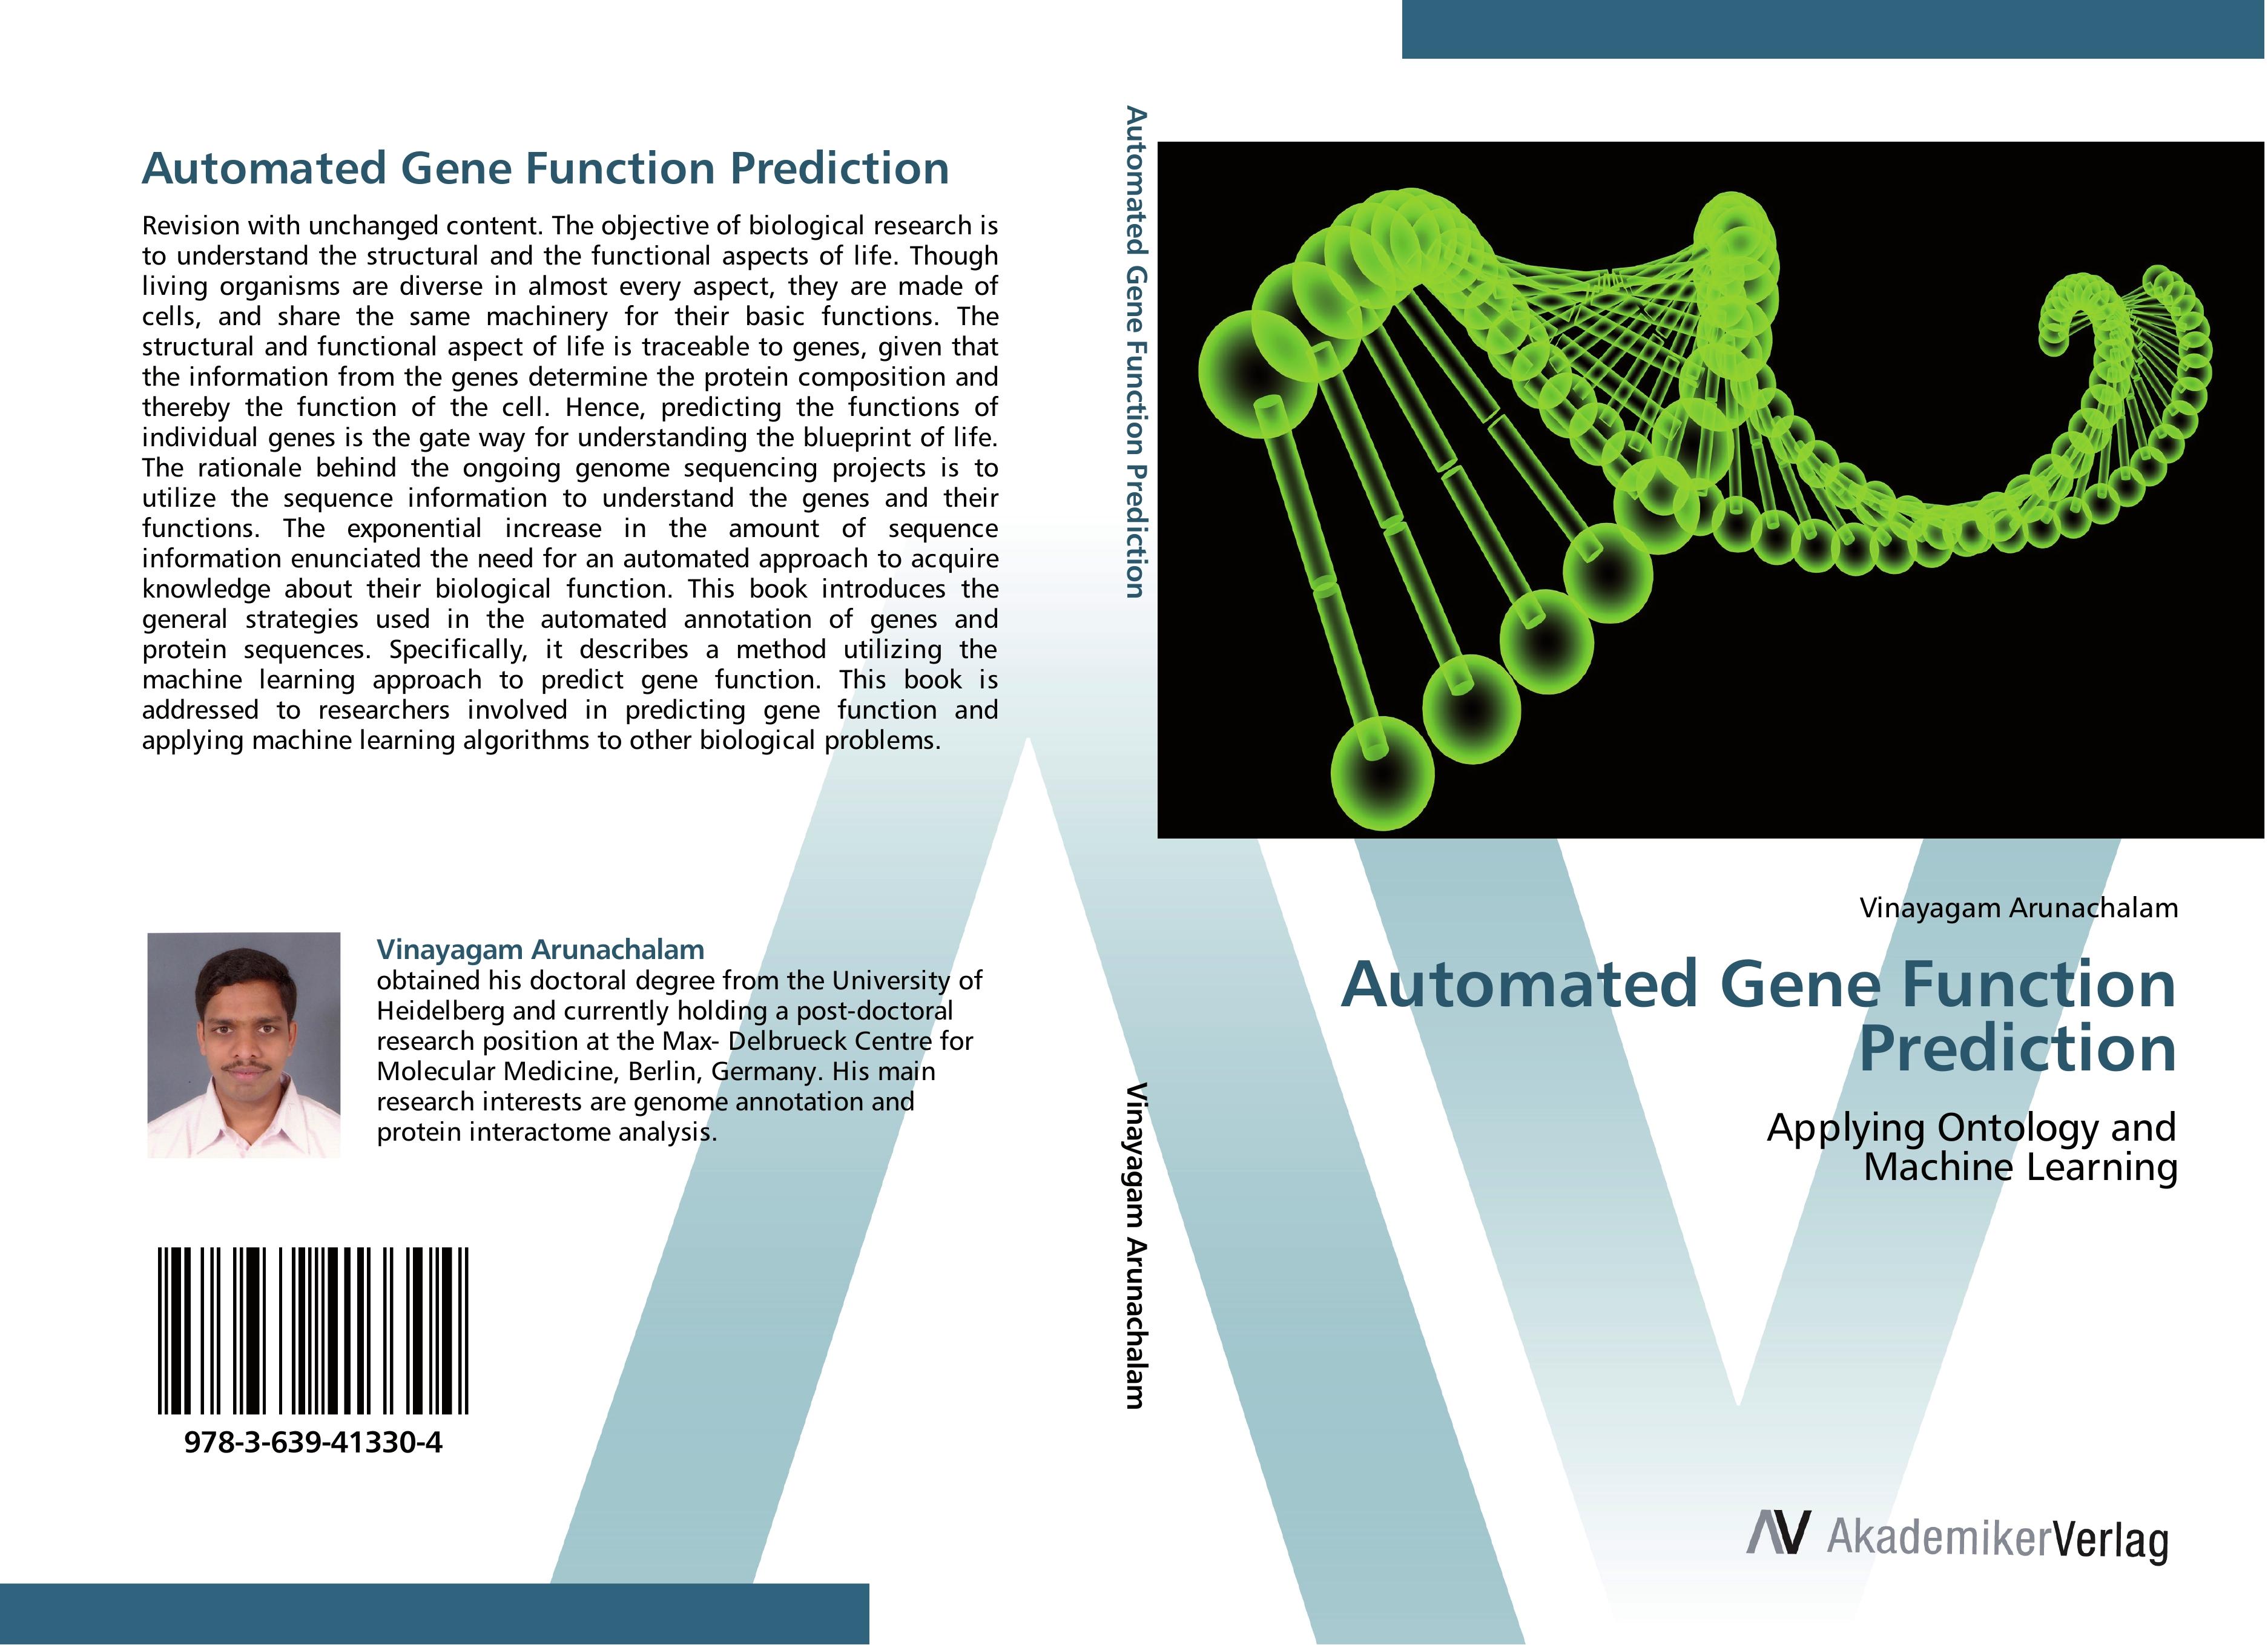 Automated Gene Function Prediction - Vinayagam Arunachalam